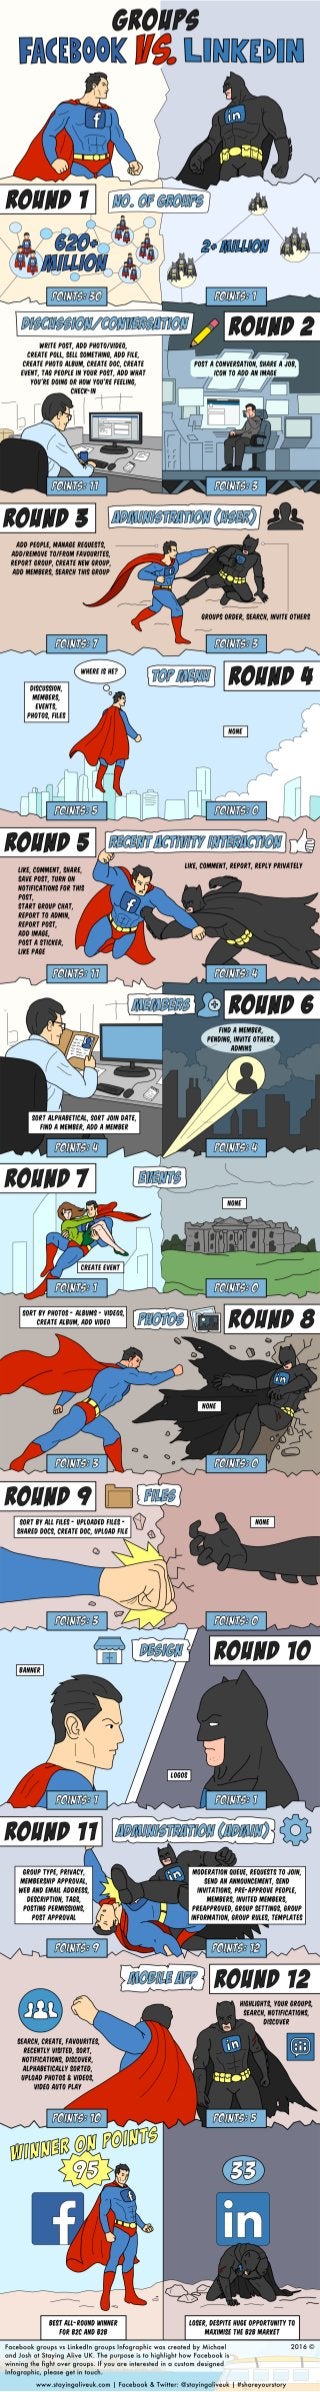 Superman vs Batman [Infographic] Facebook vs LinkedIn Groups